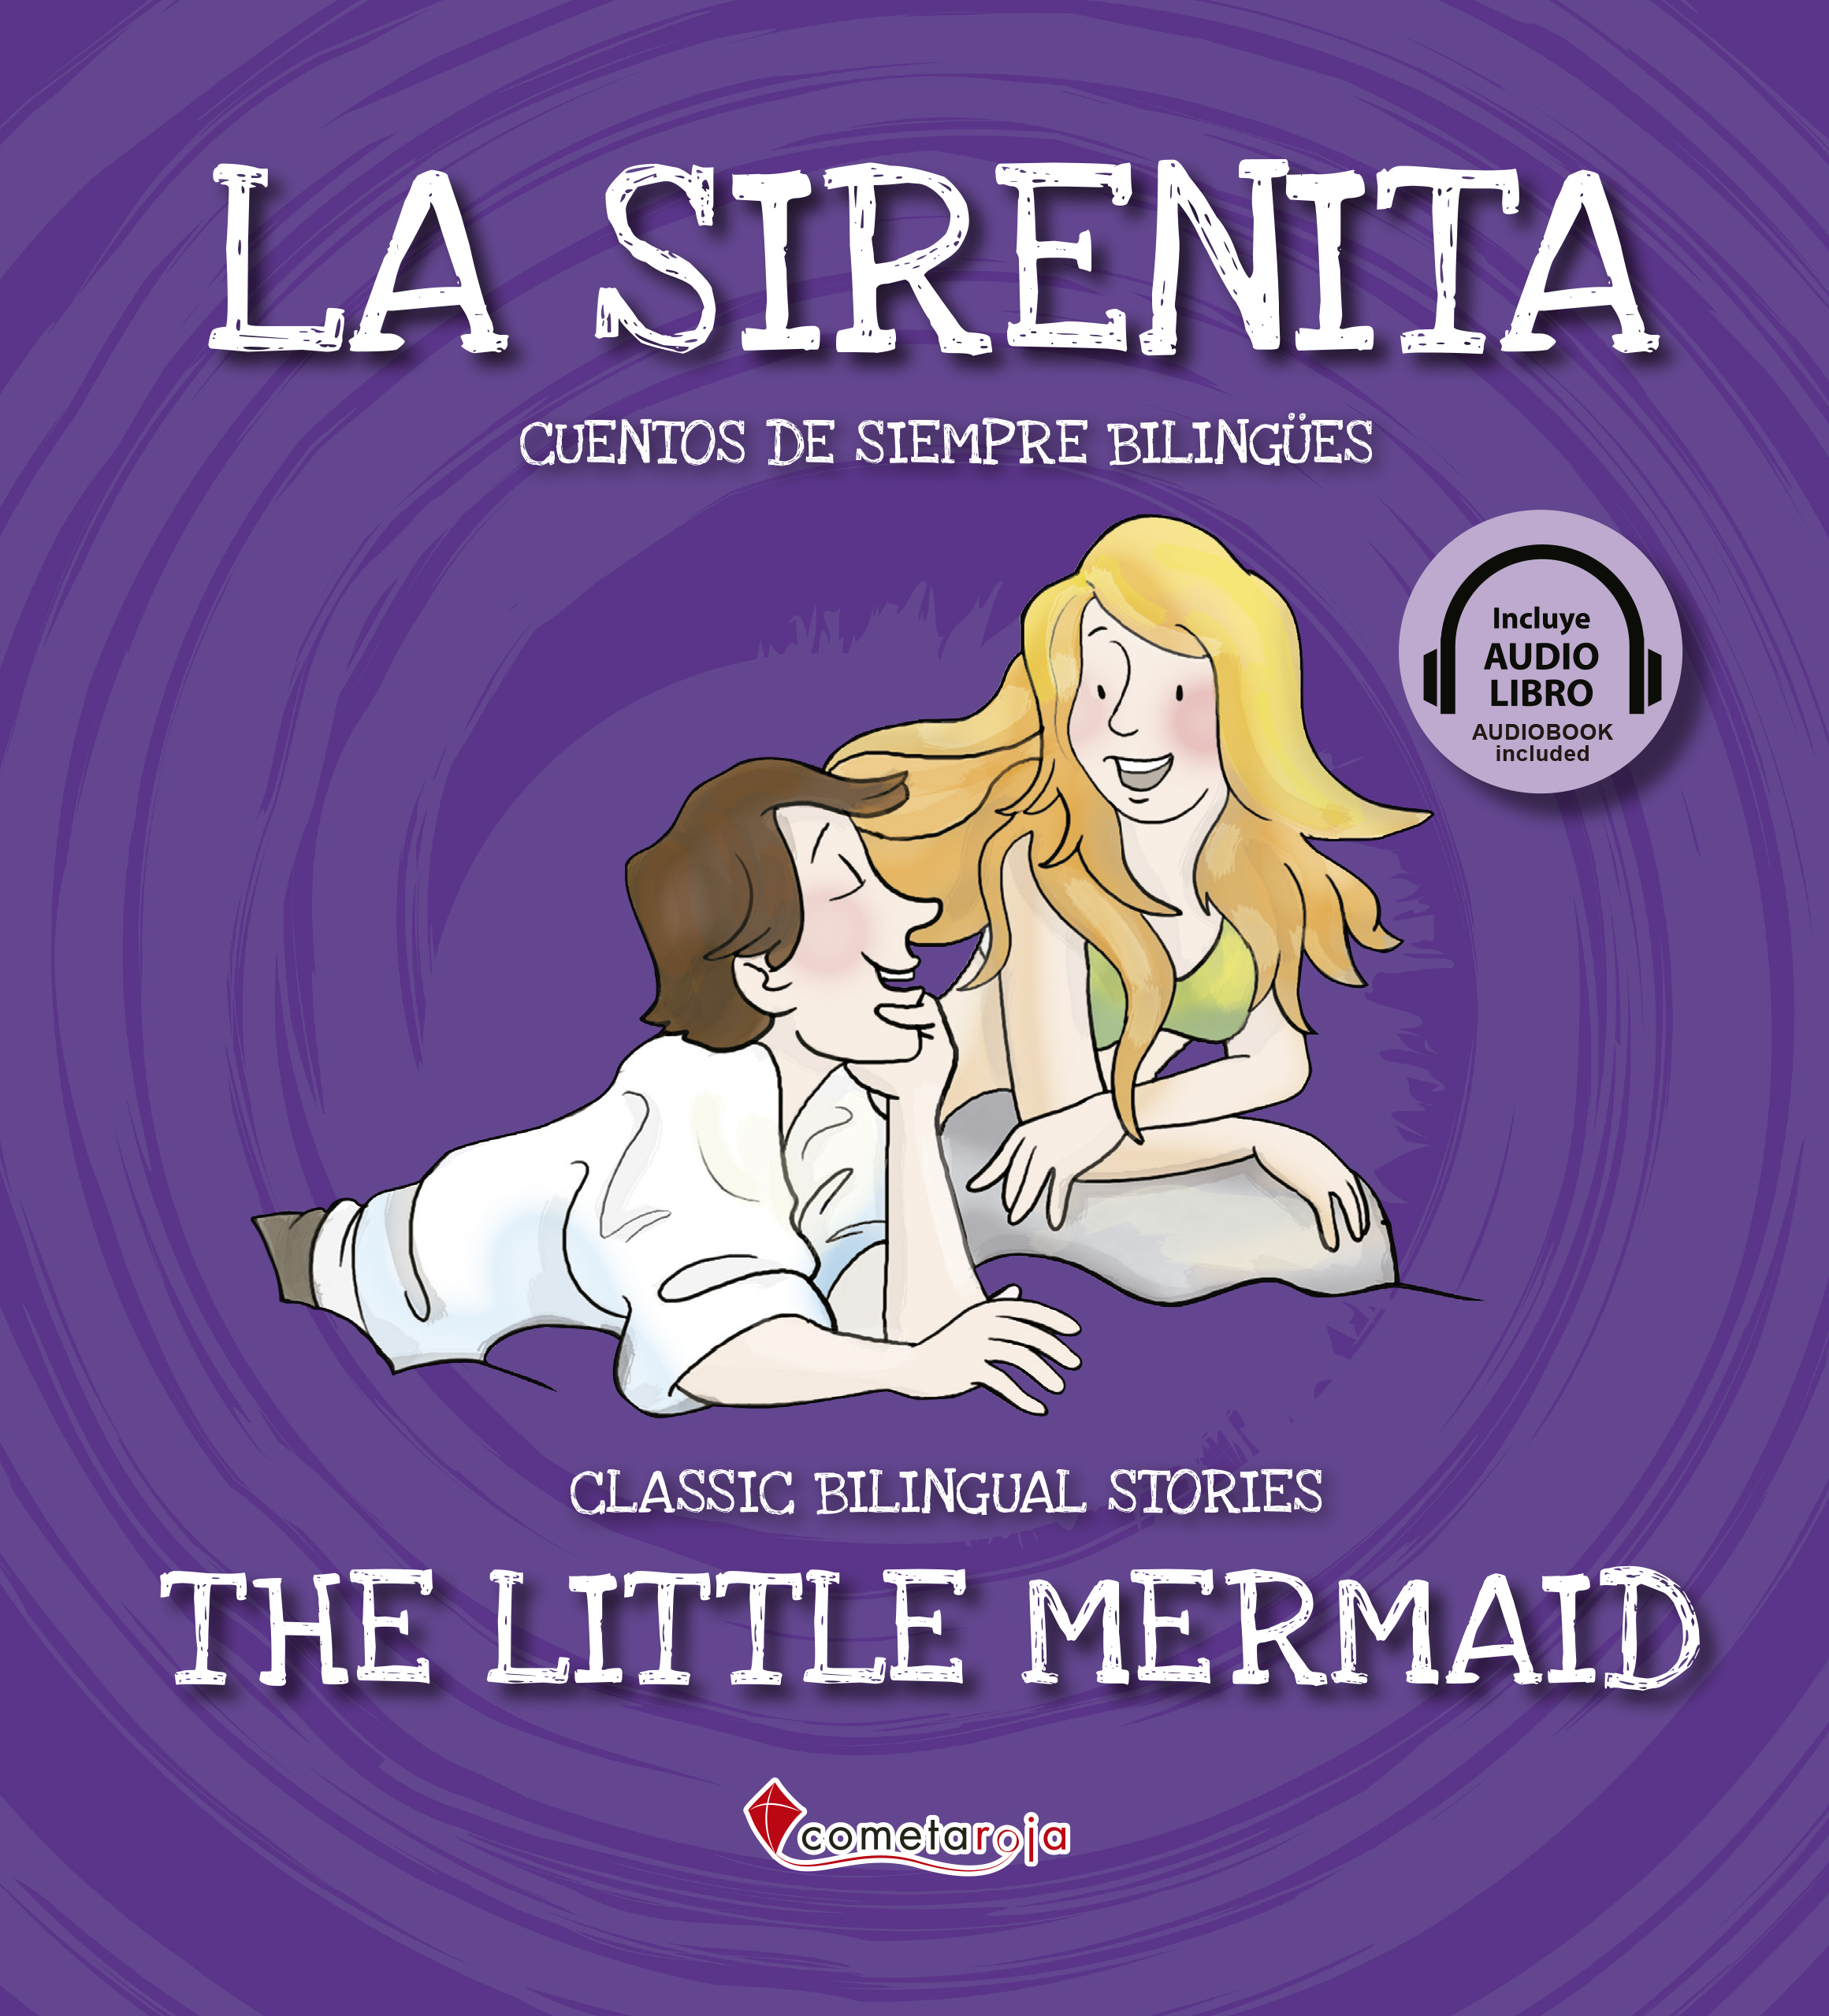 La sirenita / The little mermaid